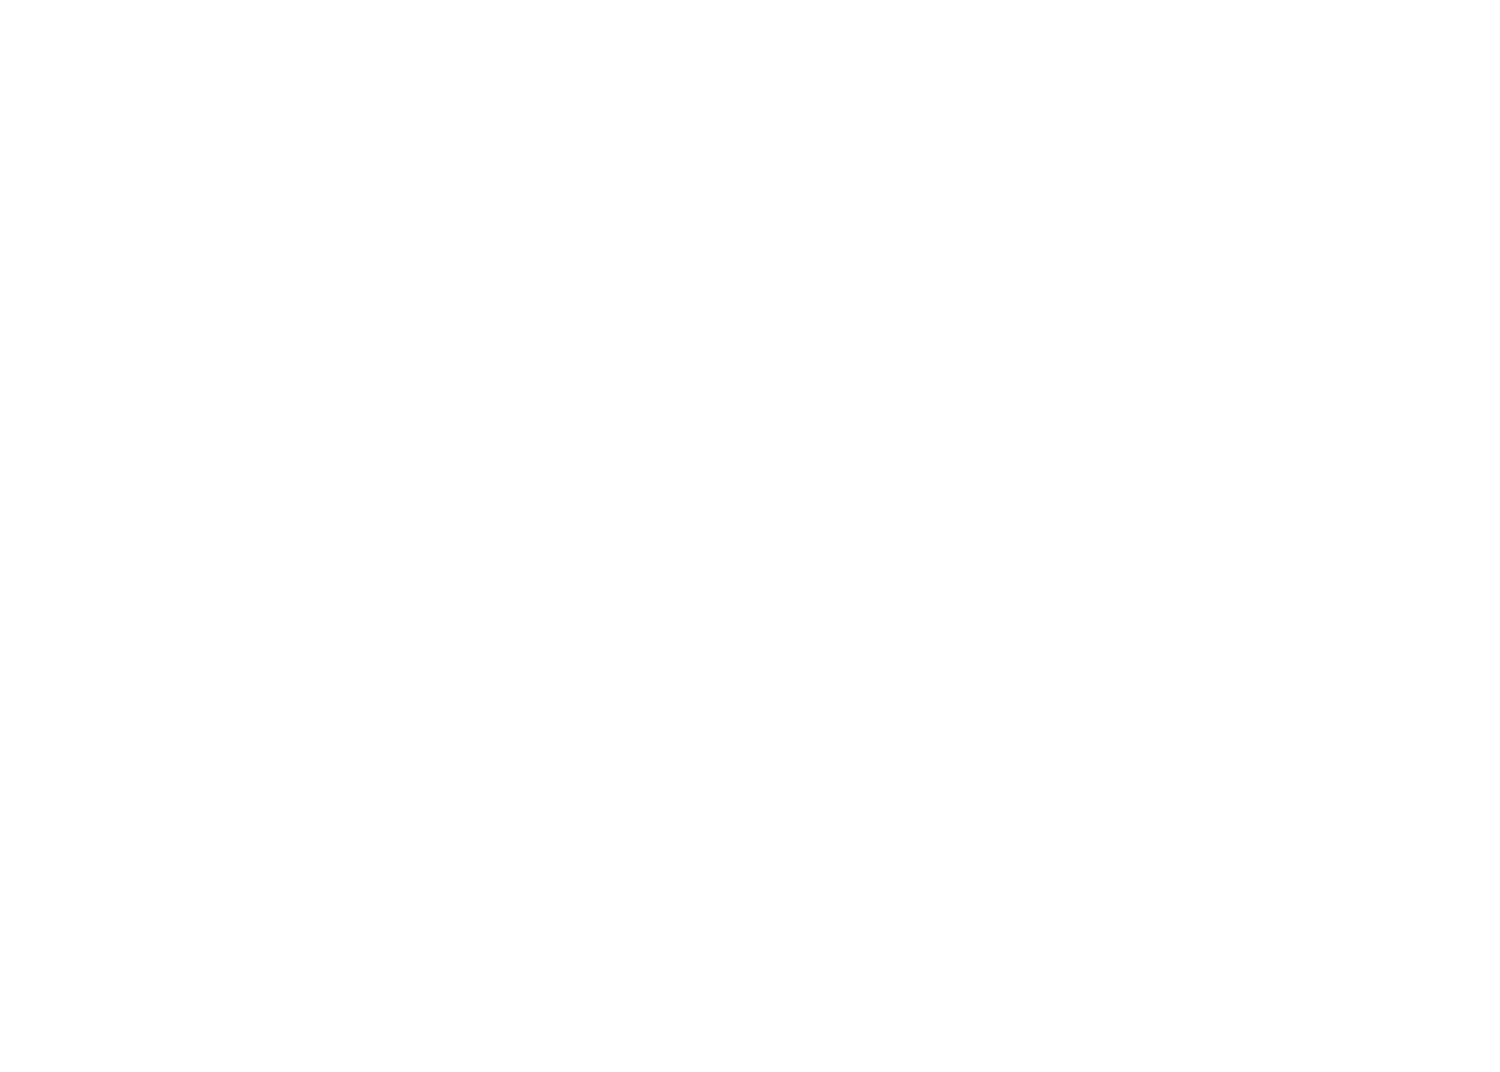 AUGUST chiropractic